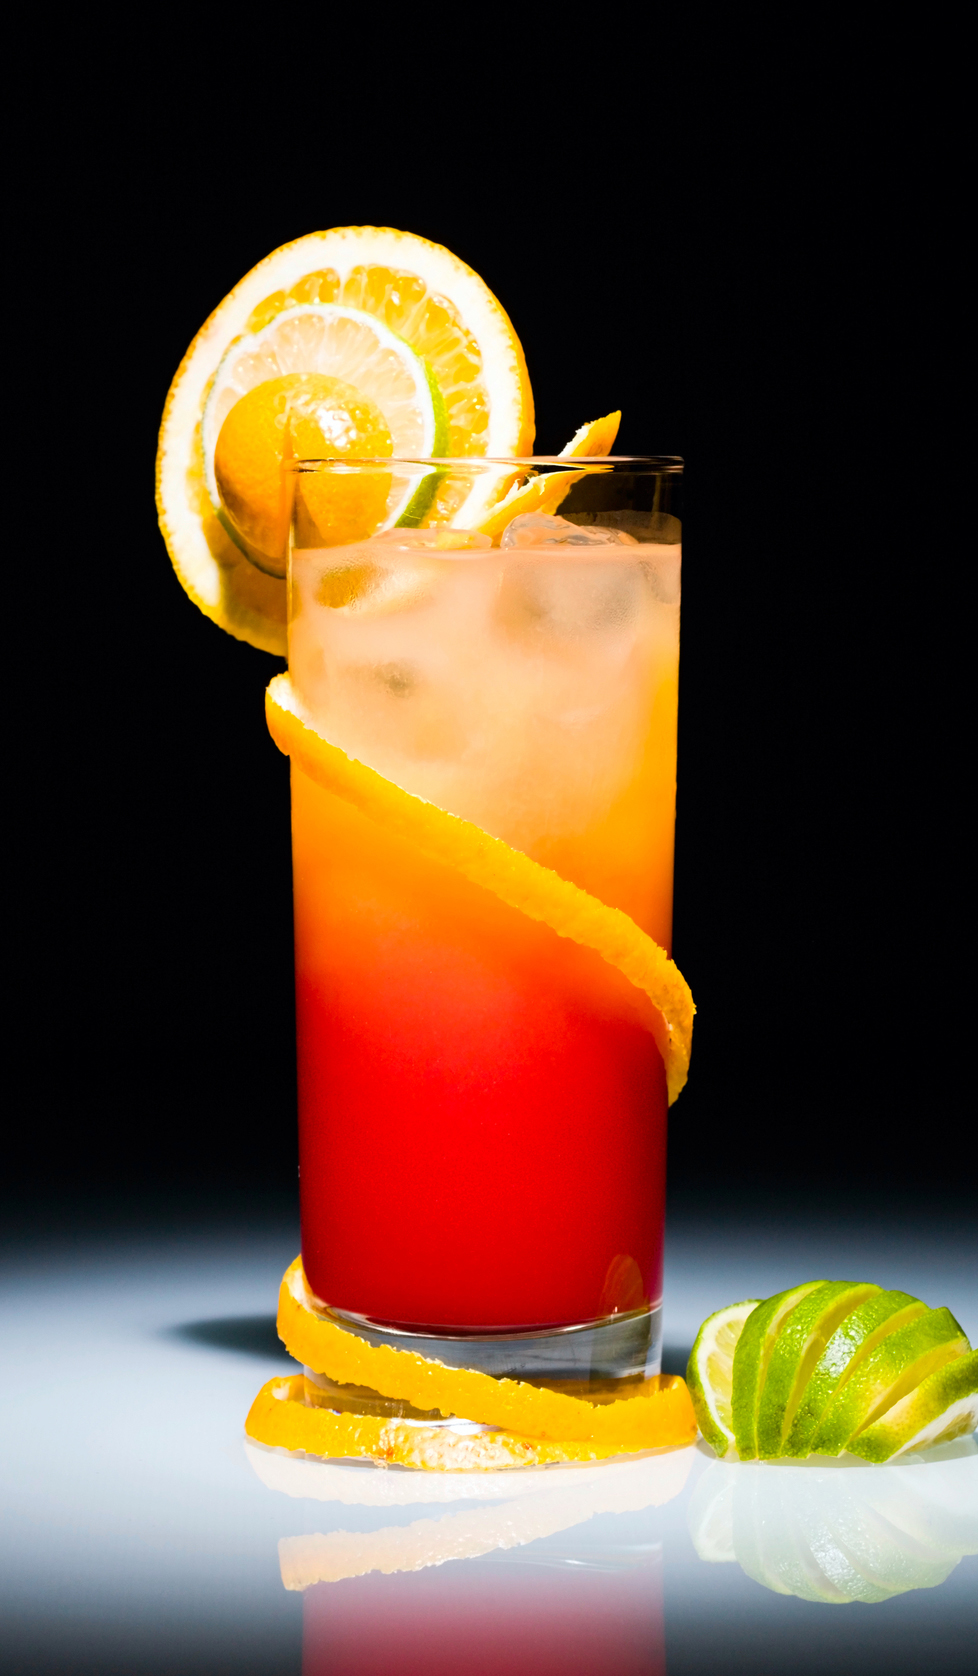 Kola Krush cocktail in tall glass with garnish